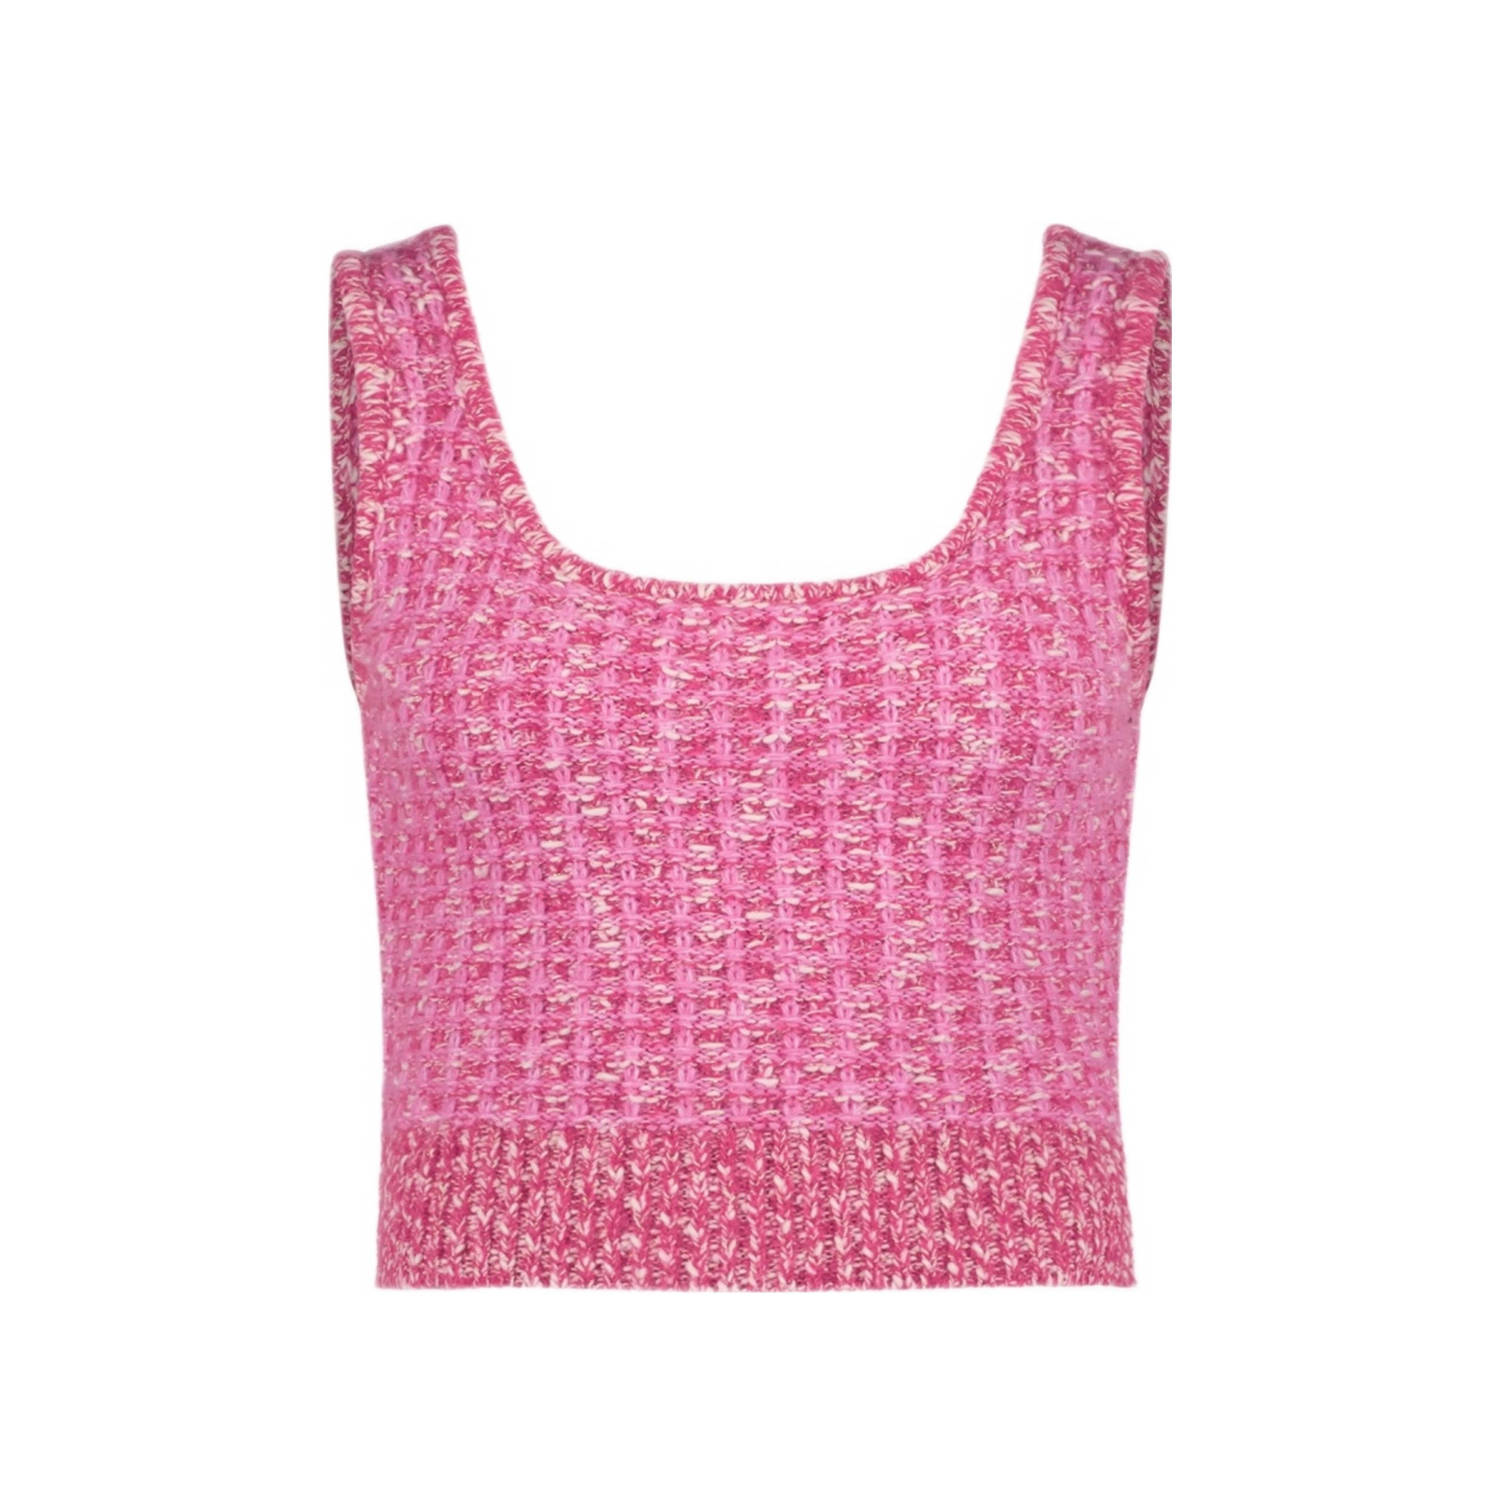 Fabienne Chapot gebreide tweed crop top Josh roze ecru donkerroze